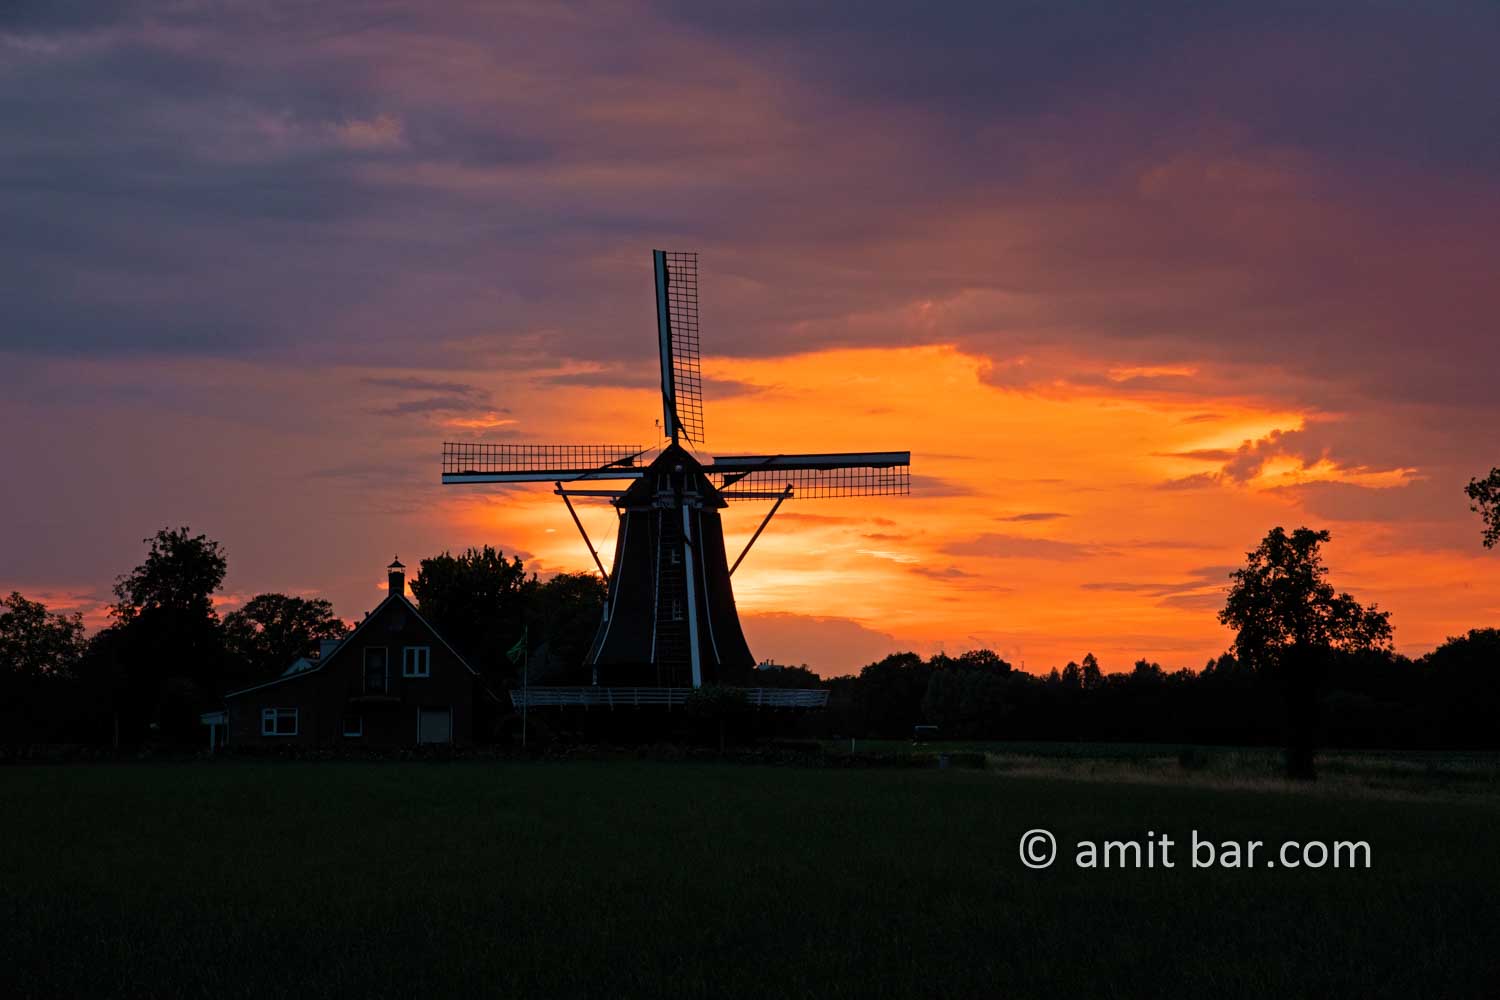 Rain clouds, sunset and windmill I: Rain clouds, sunset and windmill in Doetinchem, The Netherlands